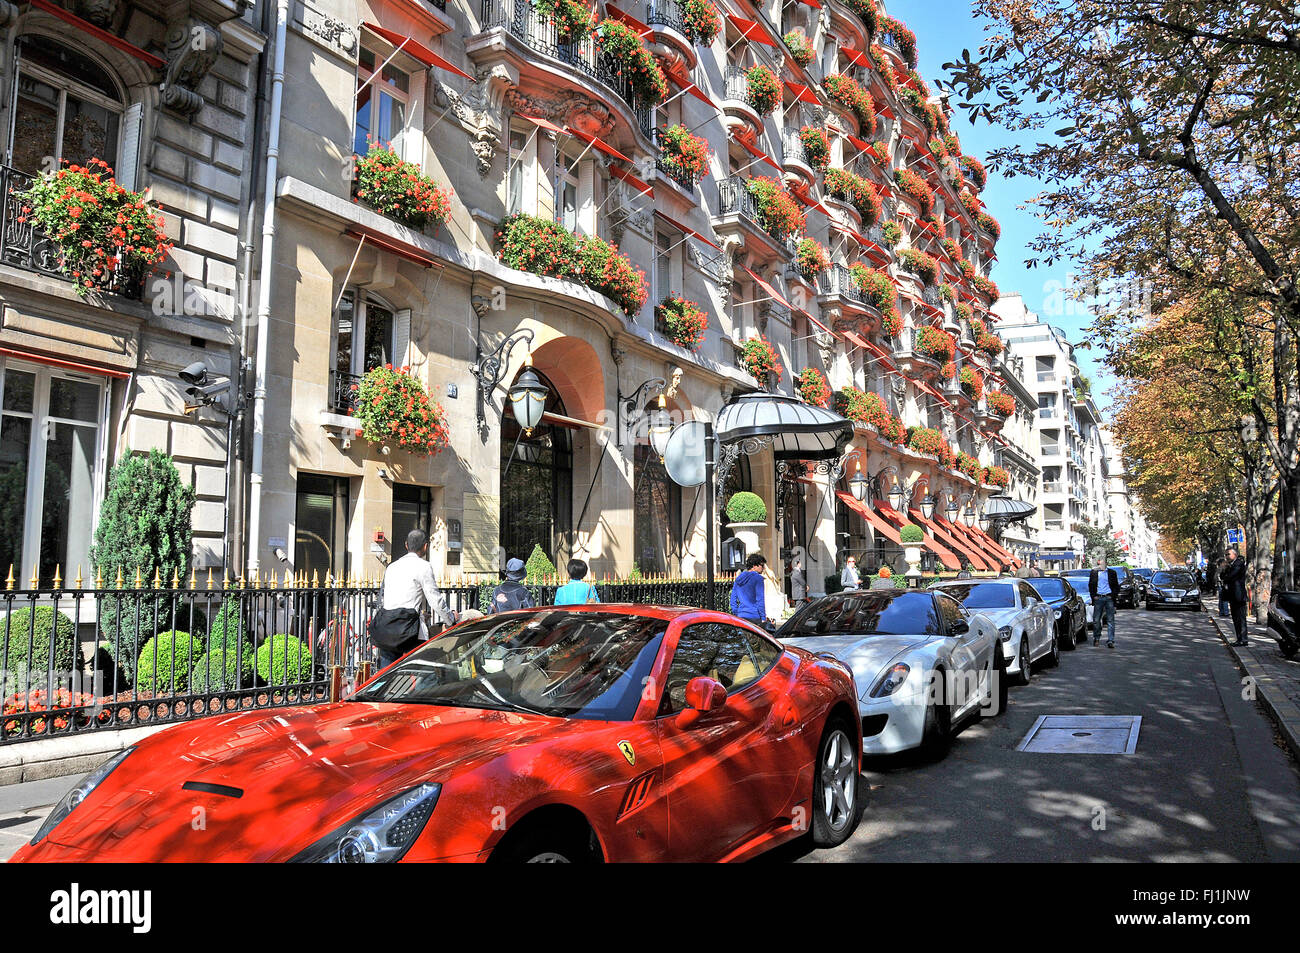 France : Luxury giants covet strategic Avenue Montaigne side streets